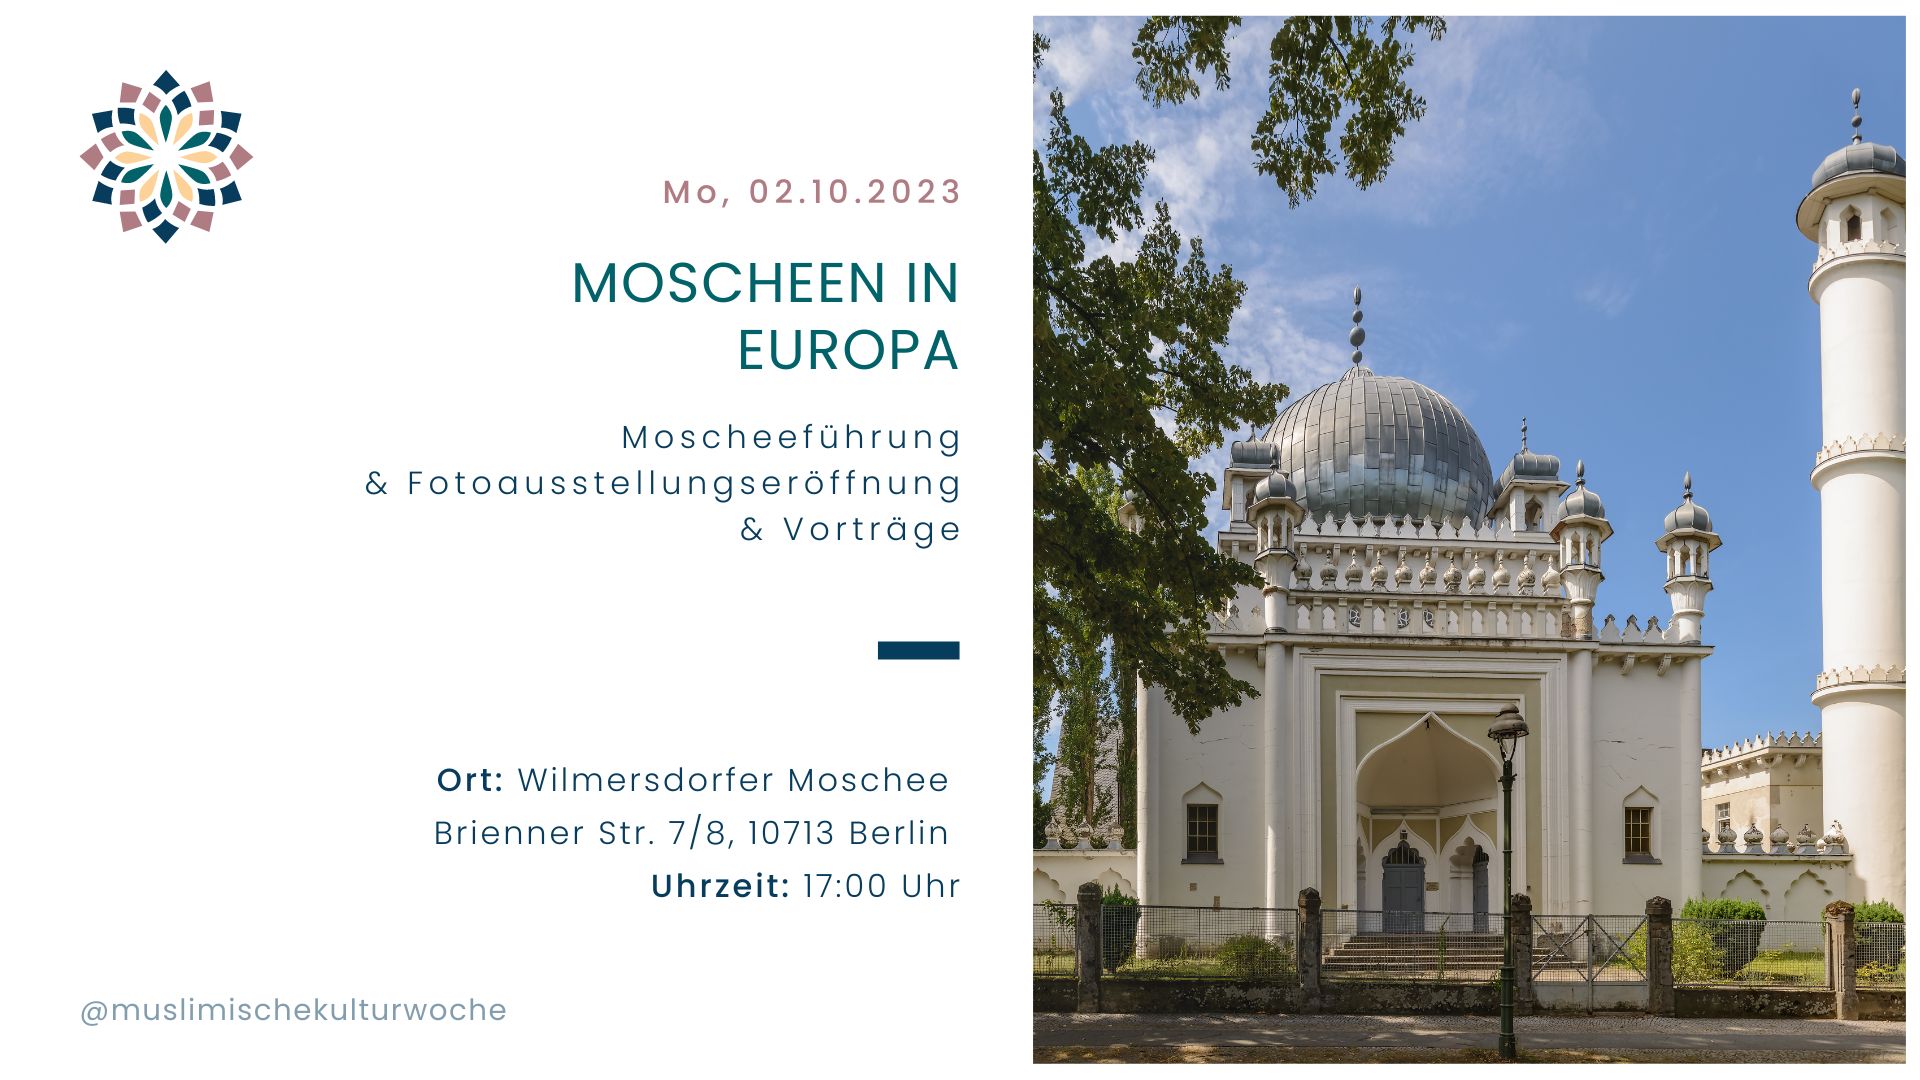 Moscheen in Europa